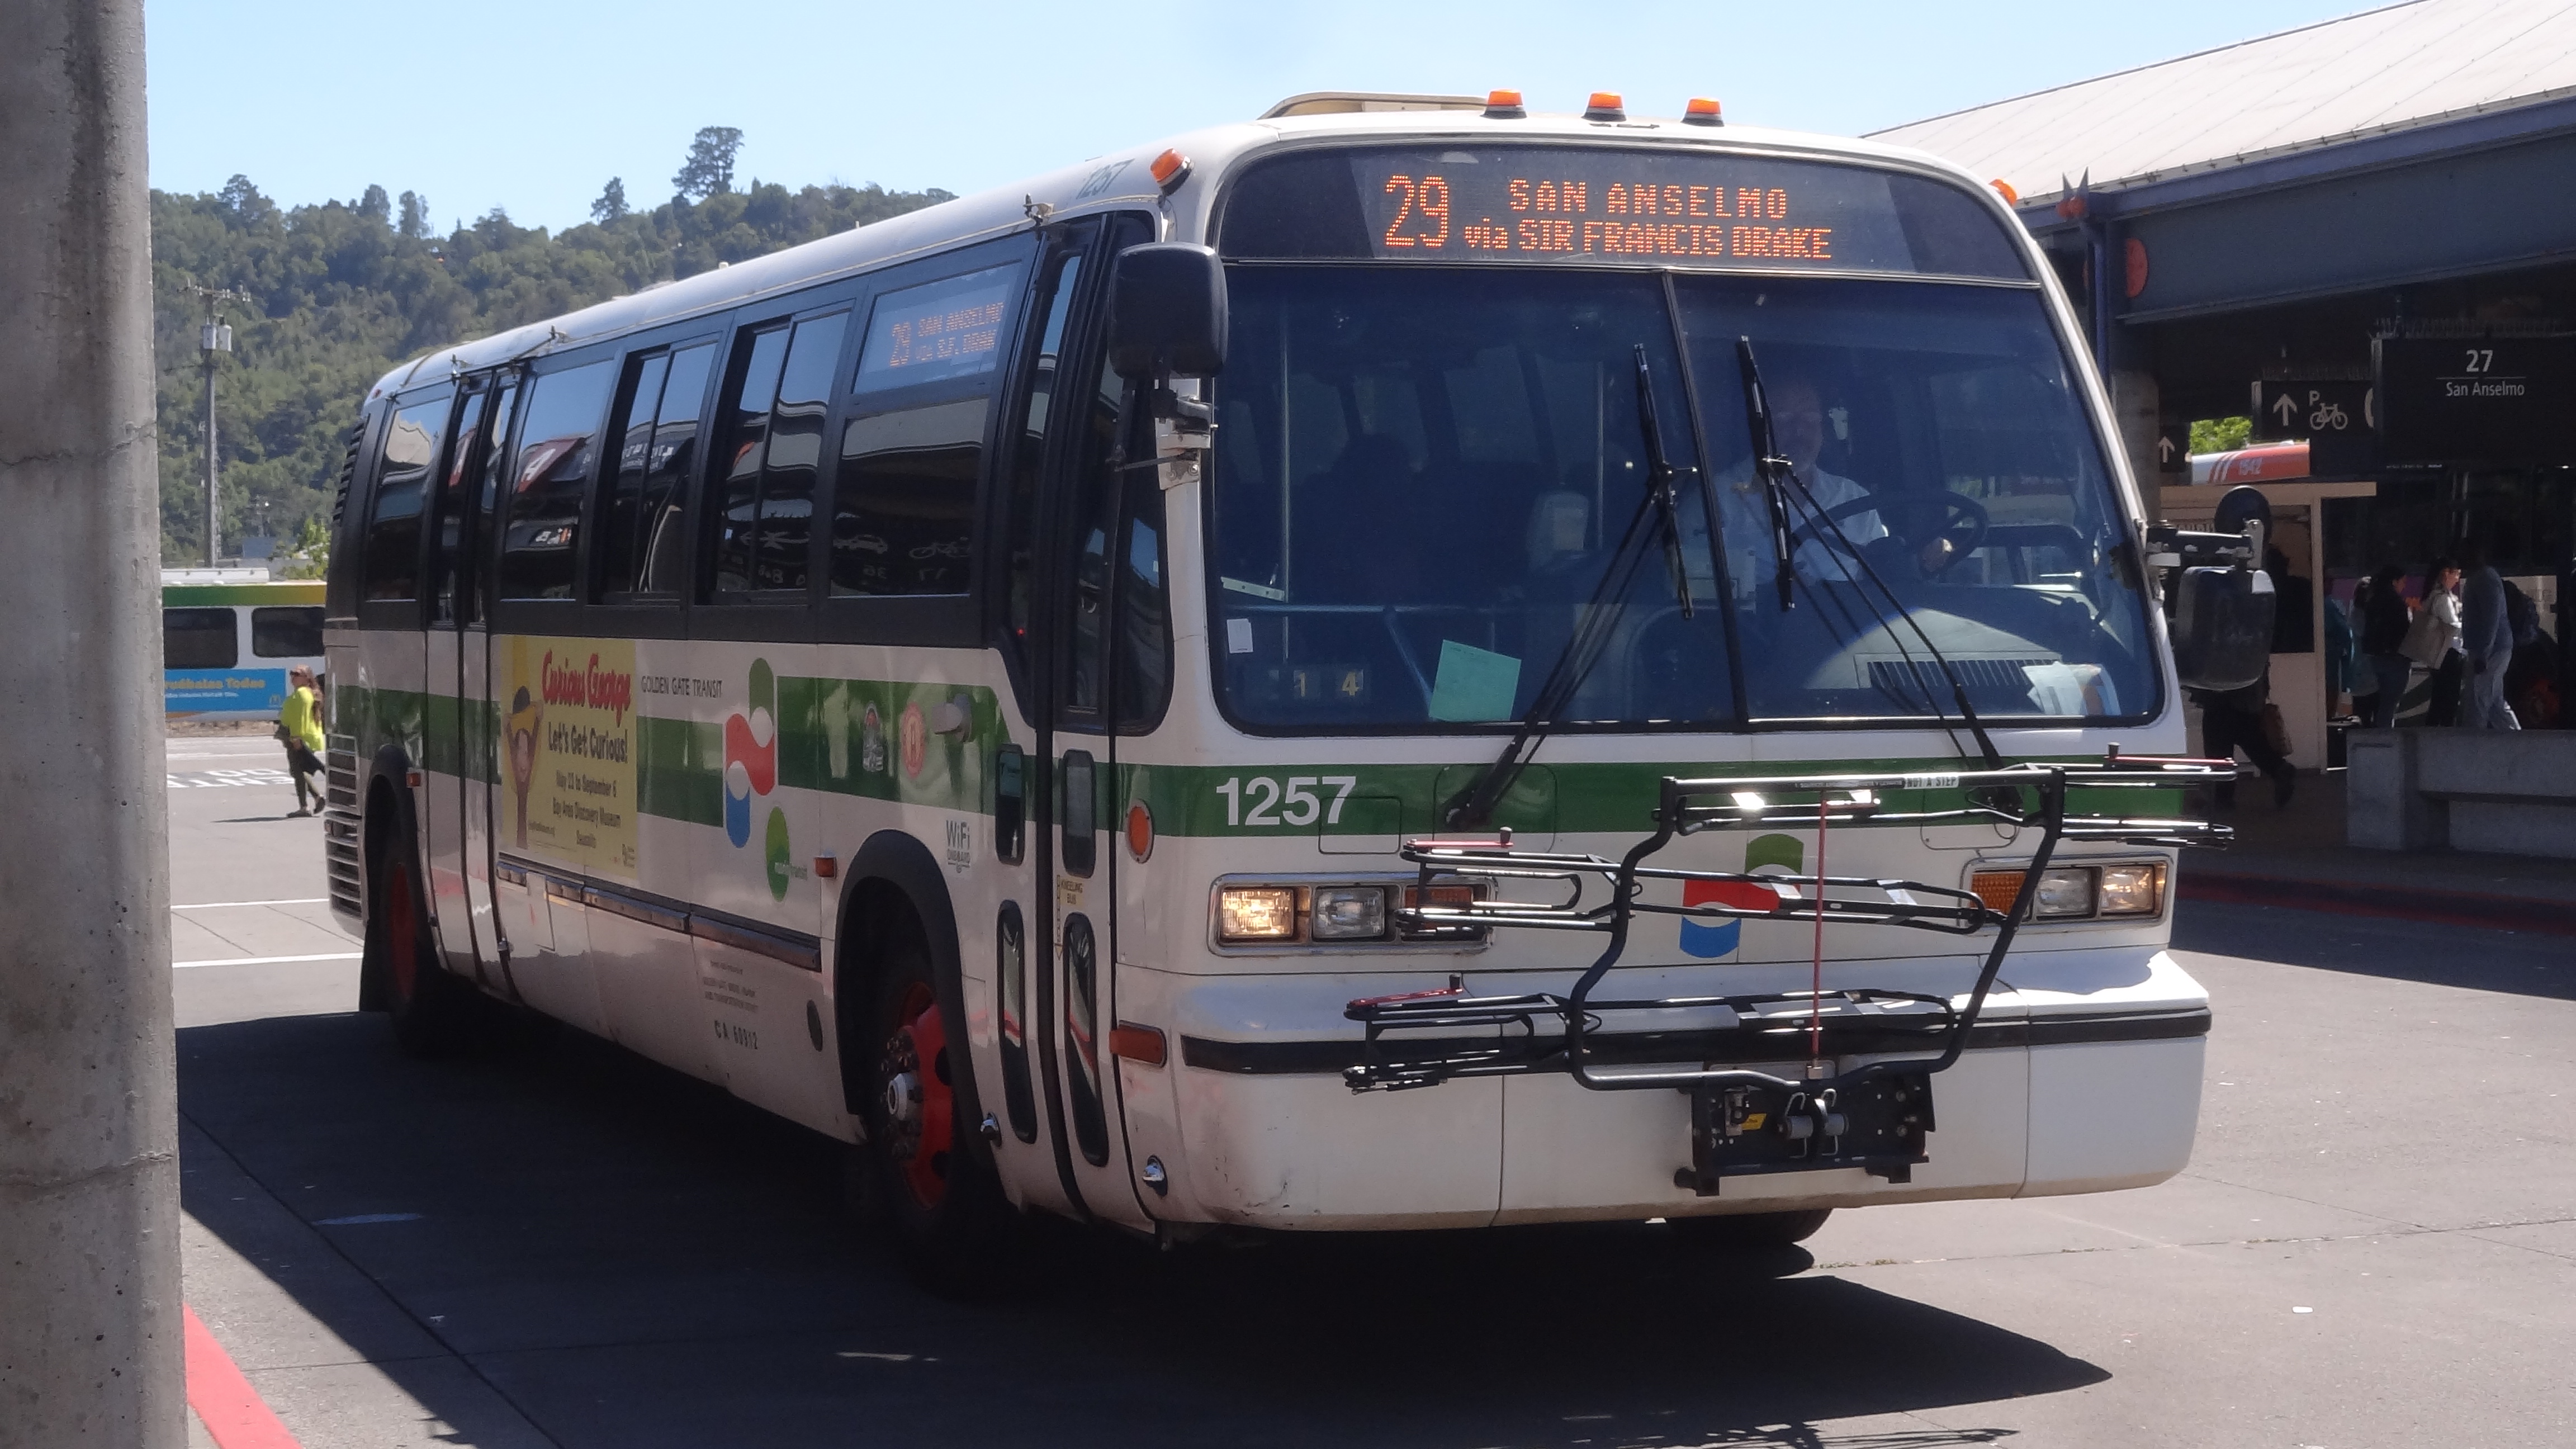 A TMC-RTS Bus Leaving San Rafael Transit Center as the Route 29 to San Anselmo